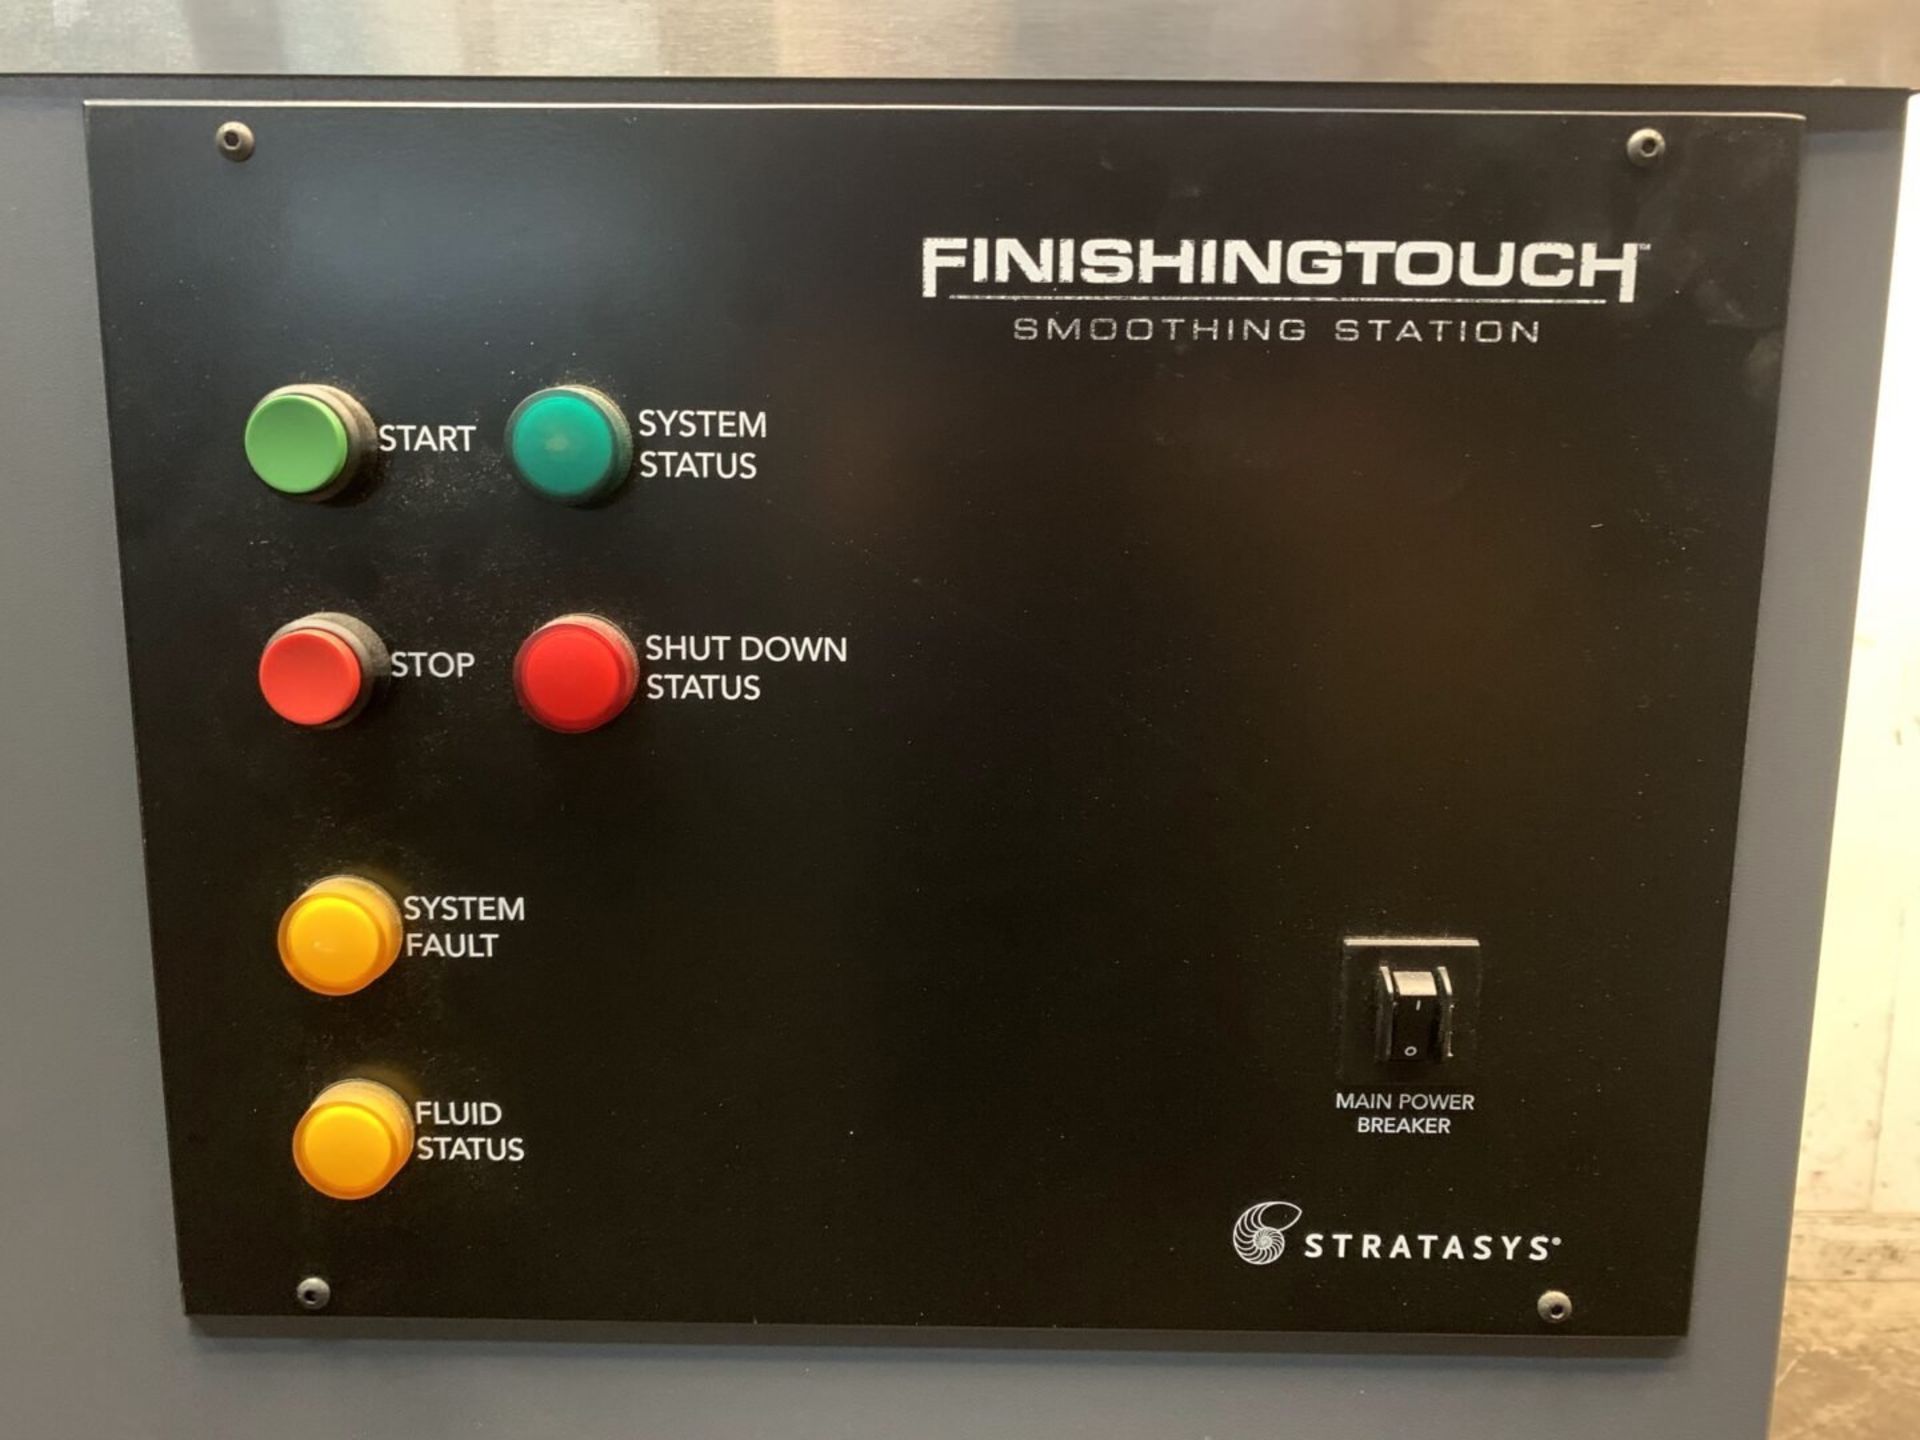 Stratasys 190-00100 Finishing Touch Smoothing Station - Image 4 of 9